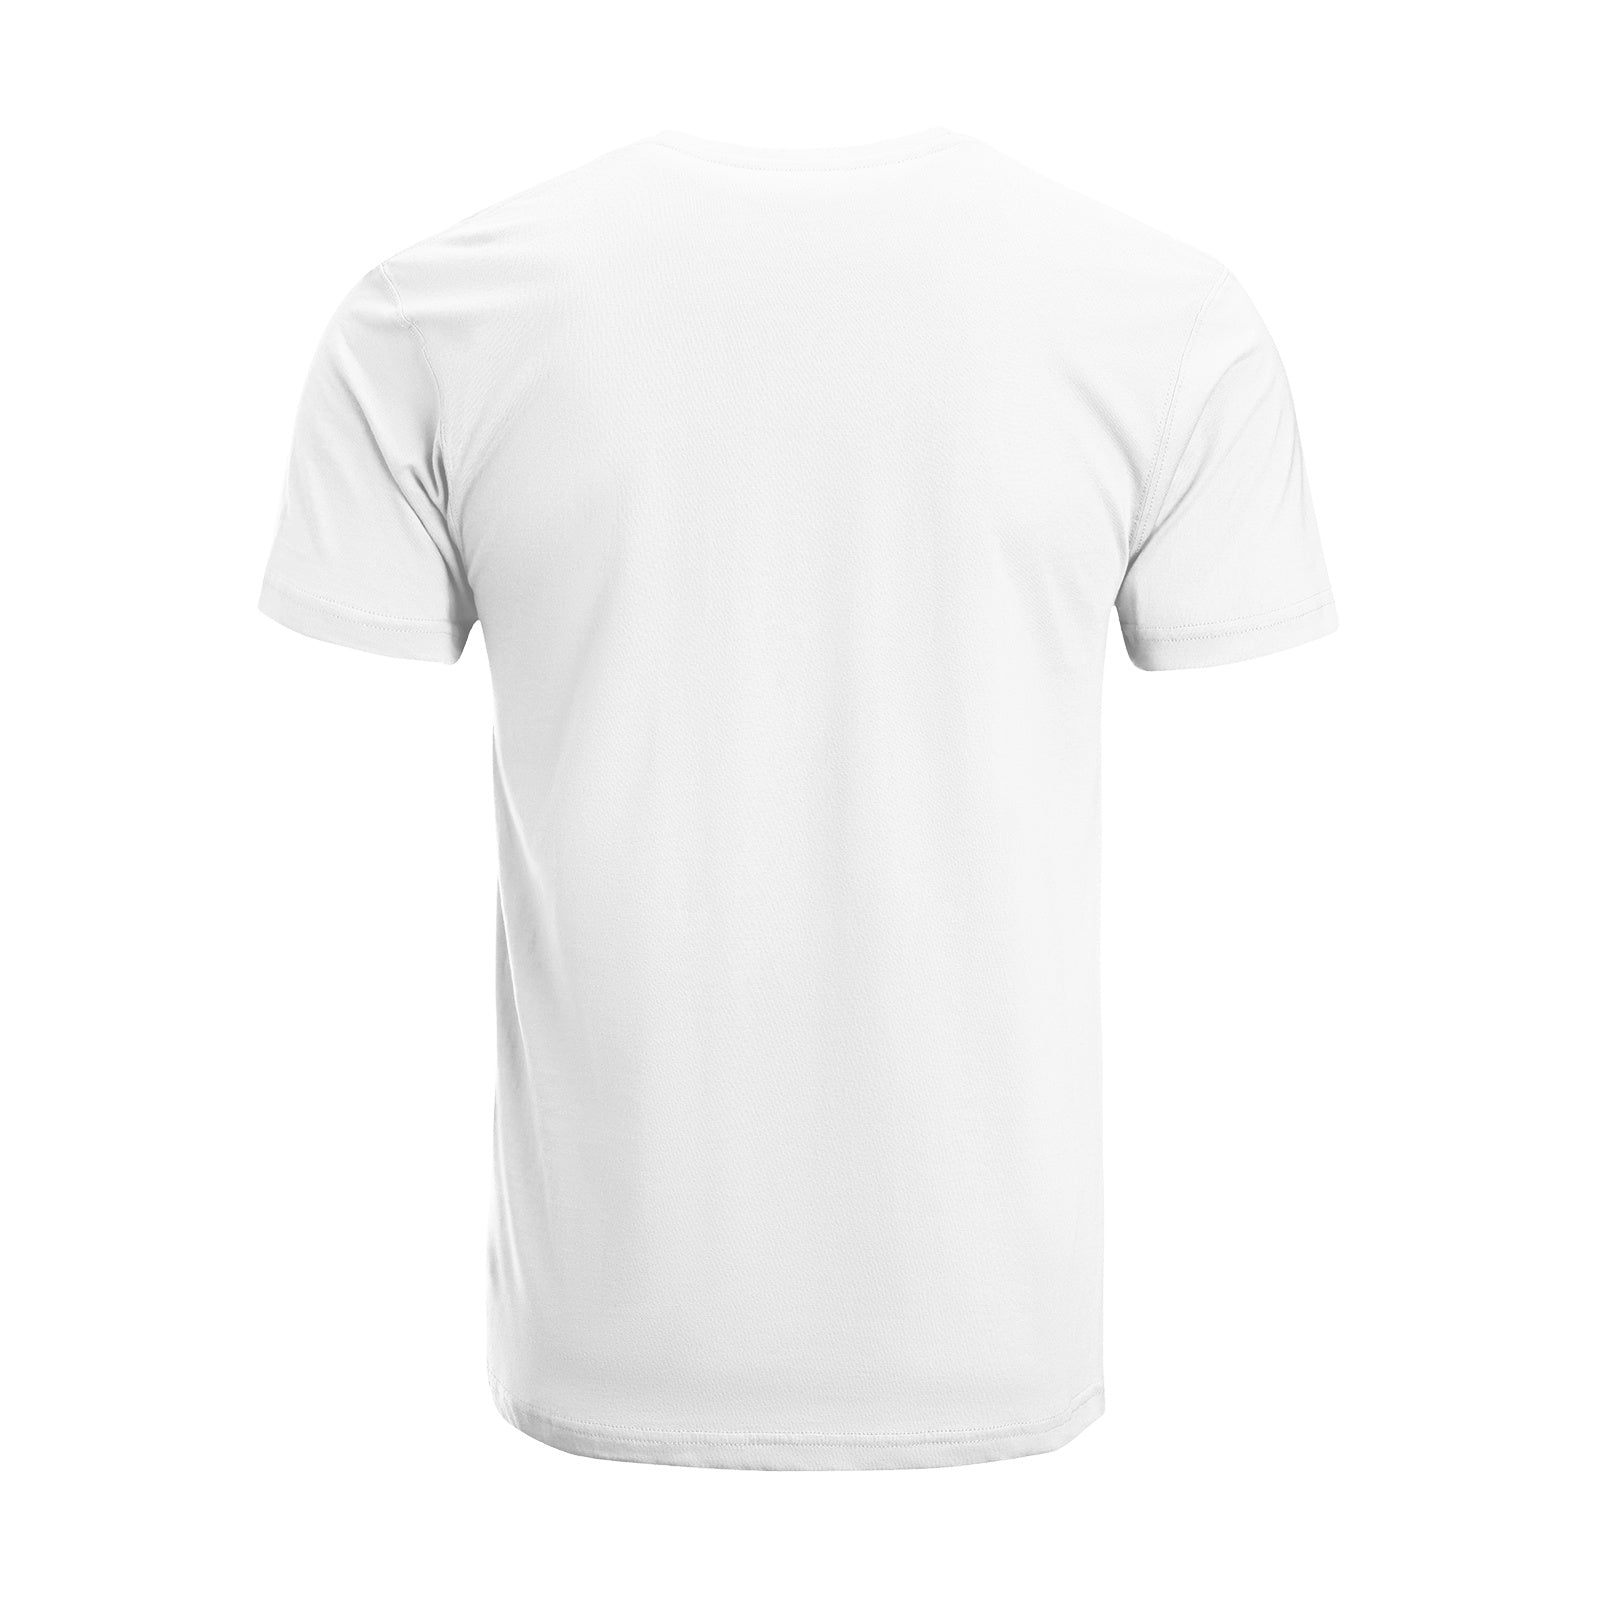 Unisex Short Sleeve Crew Neck Cotton Jersey T-Shirt CAT 17 - Tara-Outfits.com